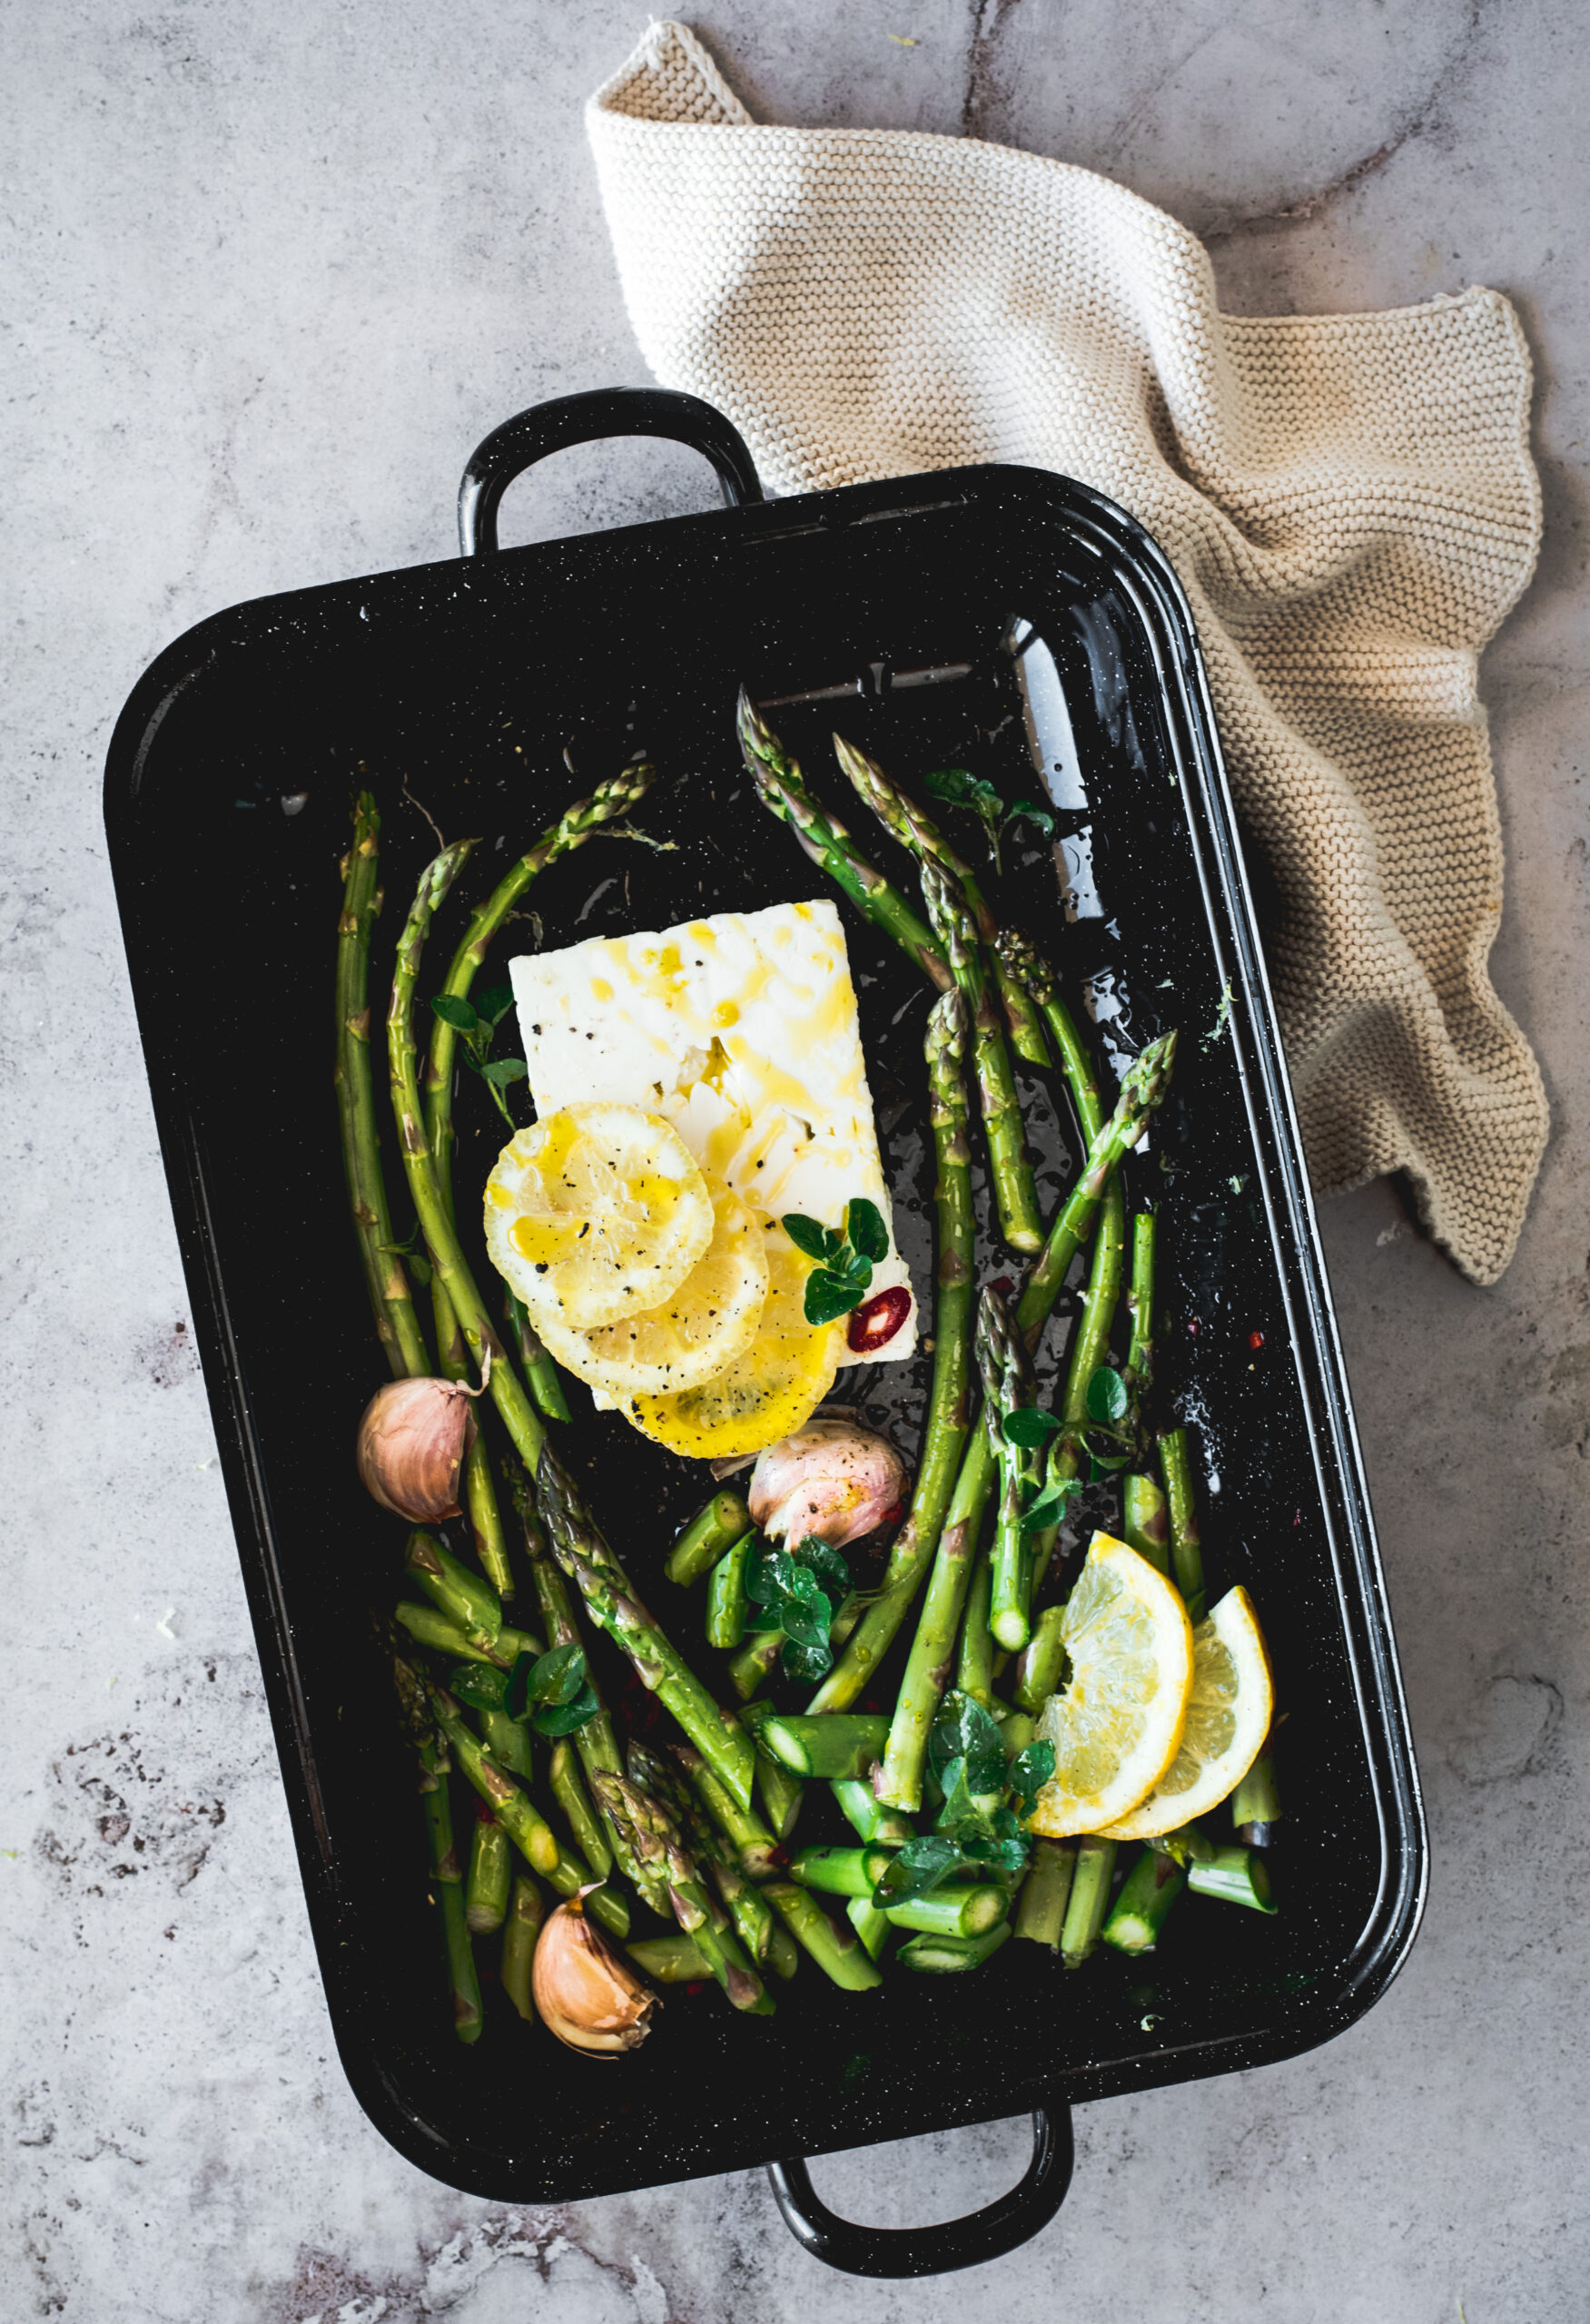 Baking dish with feta & green asparagus - food photo flatlay